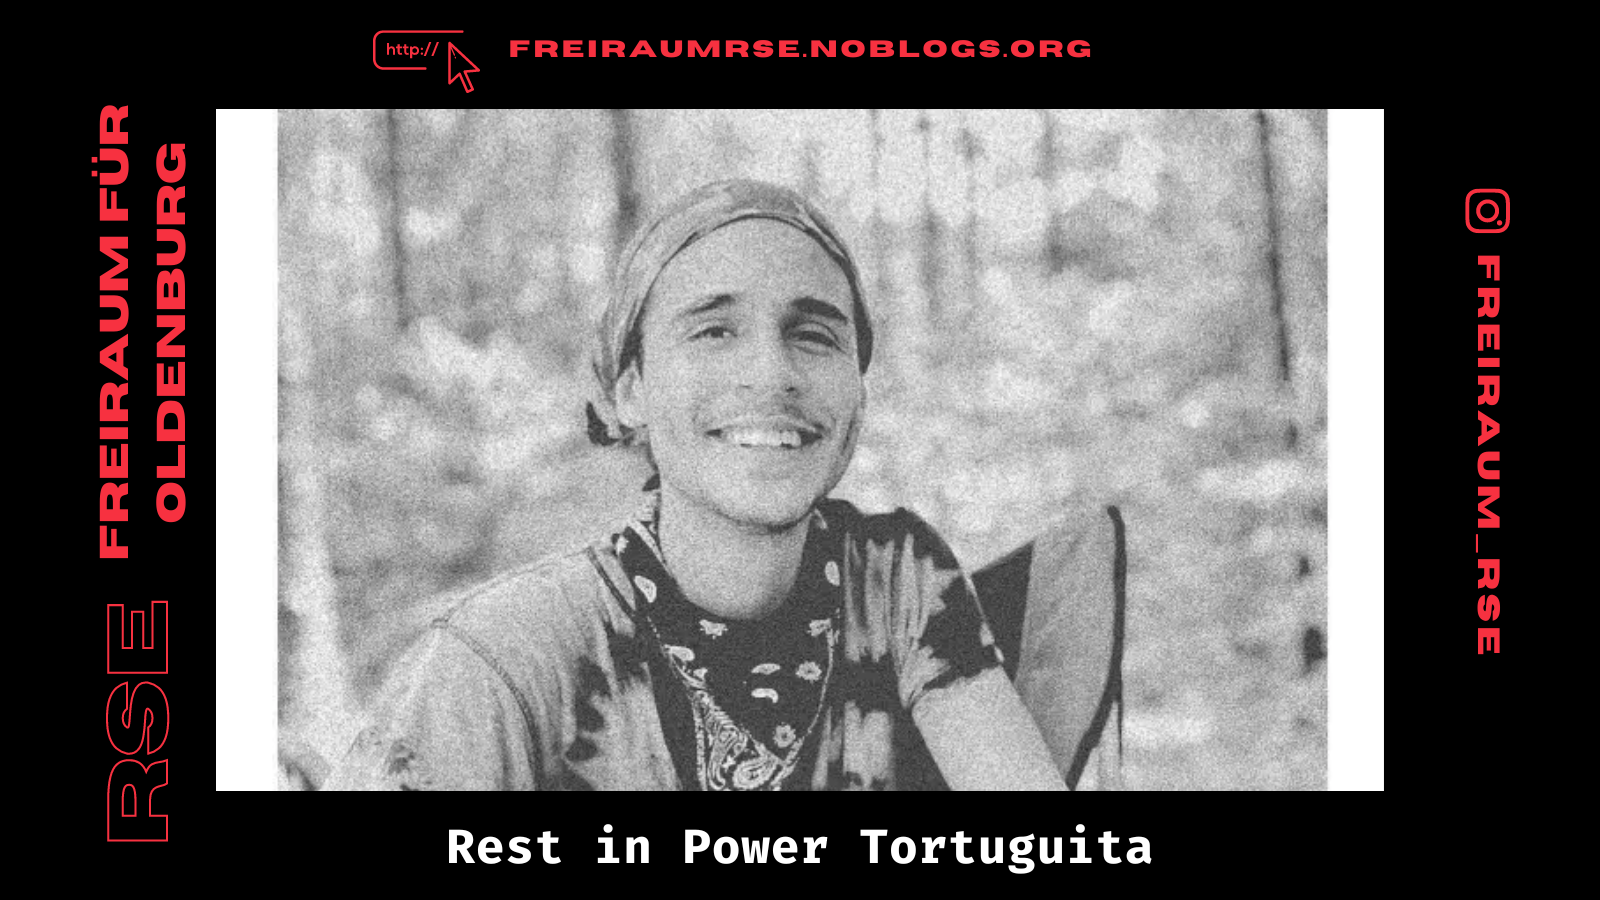 Rest in Power Tortuguita